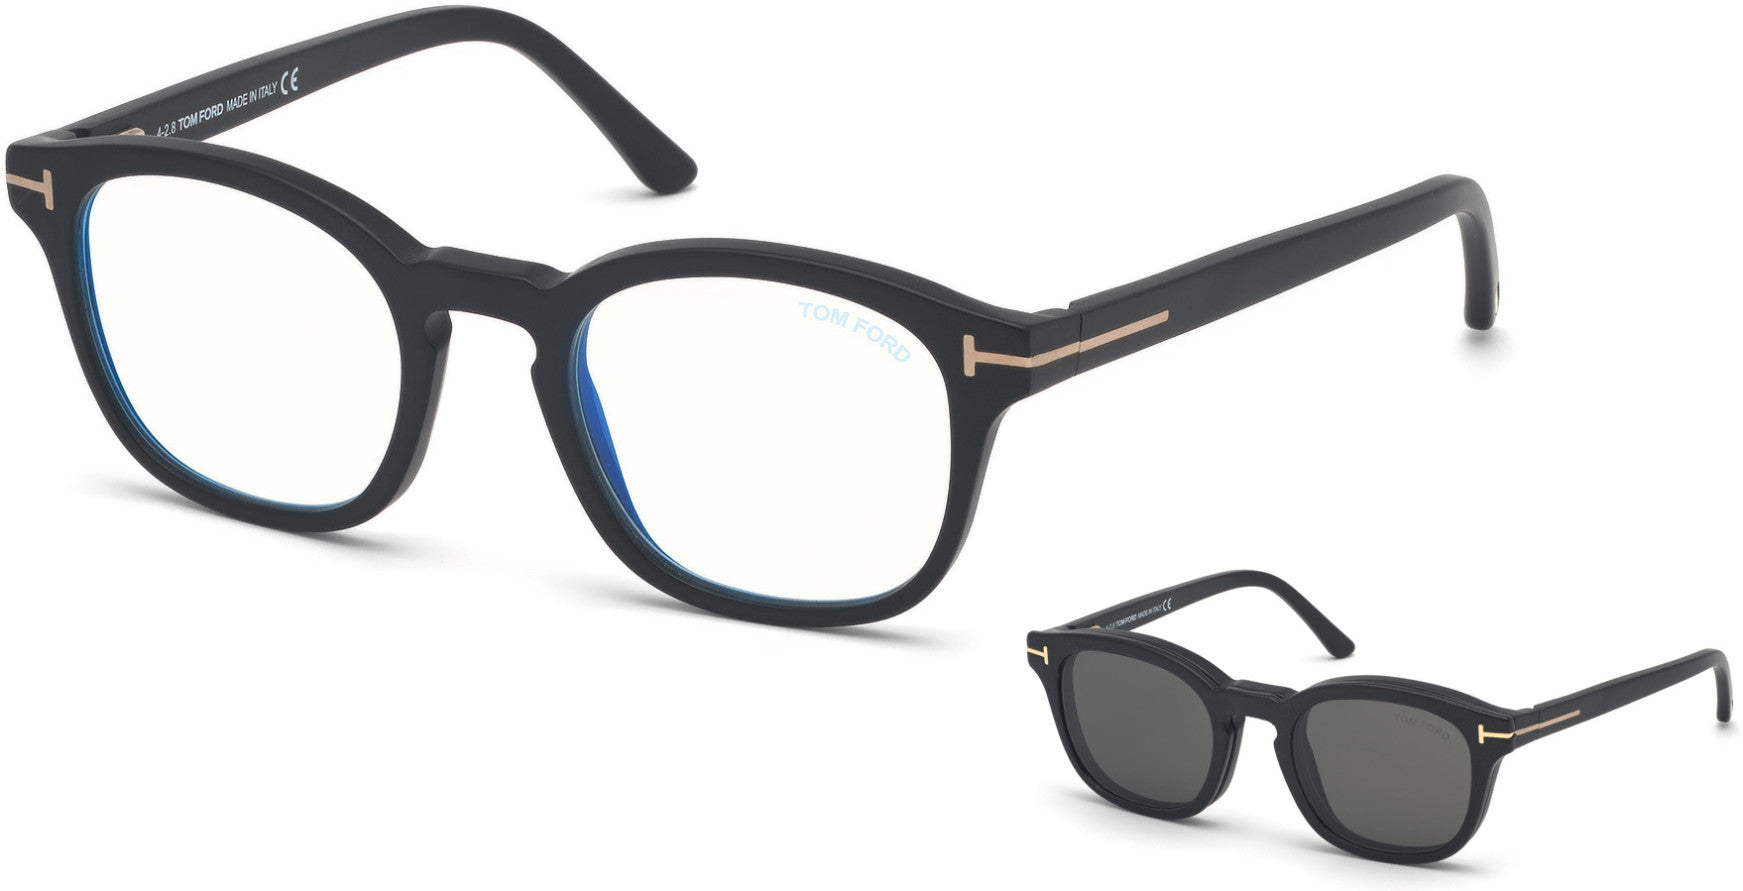 Tom Ford FT5532-B Geometric Eyeglasses 02A-02A - Matte Black/ Blue Block Lenses, Smoke Clip In Black Leather